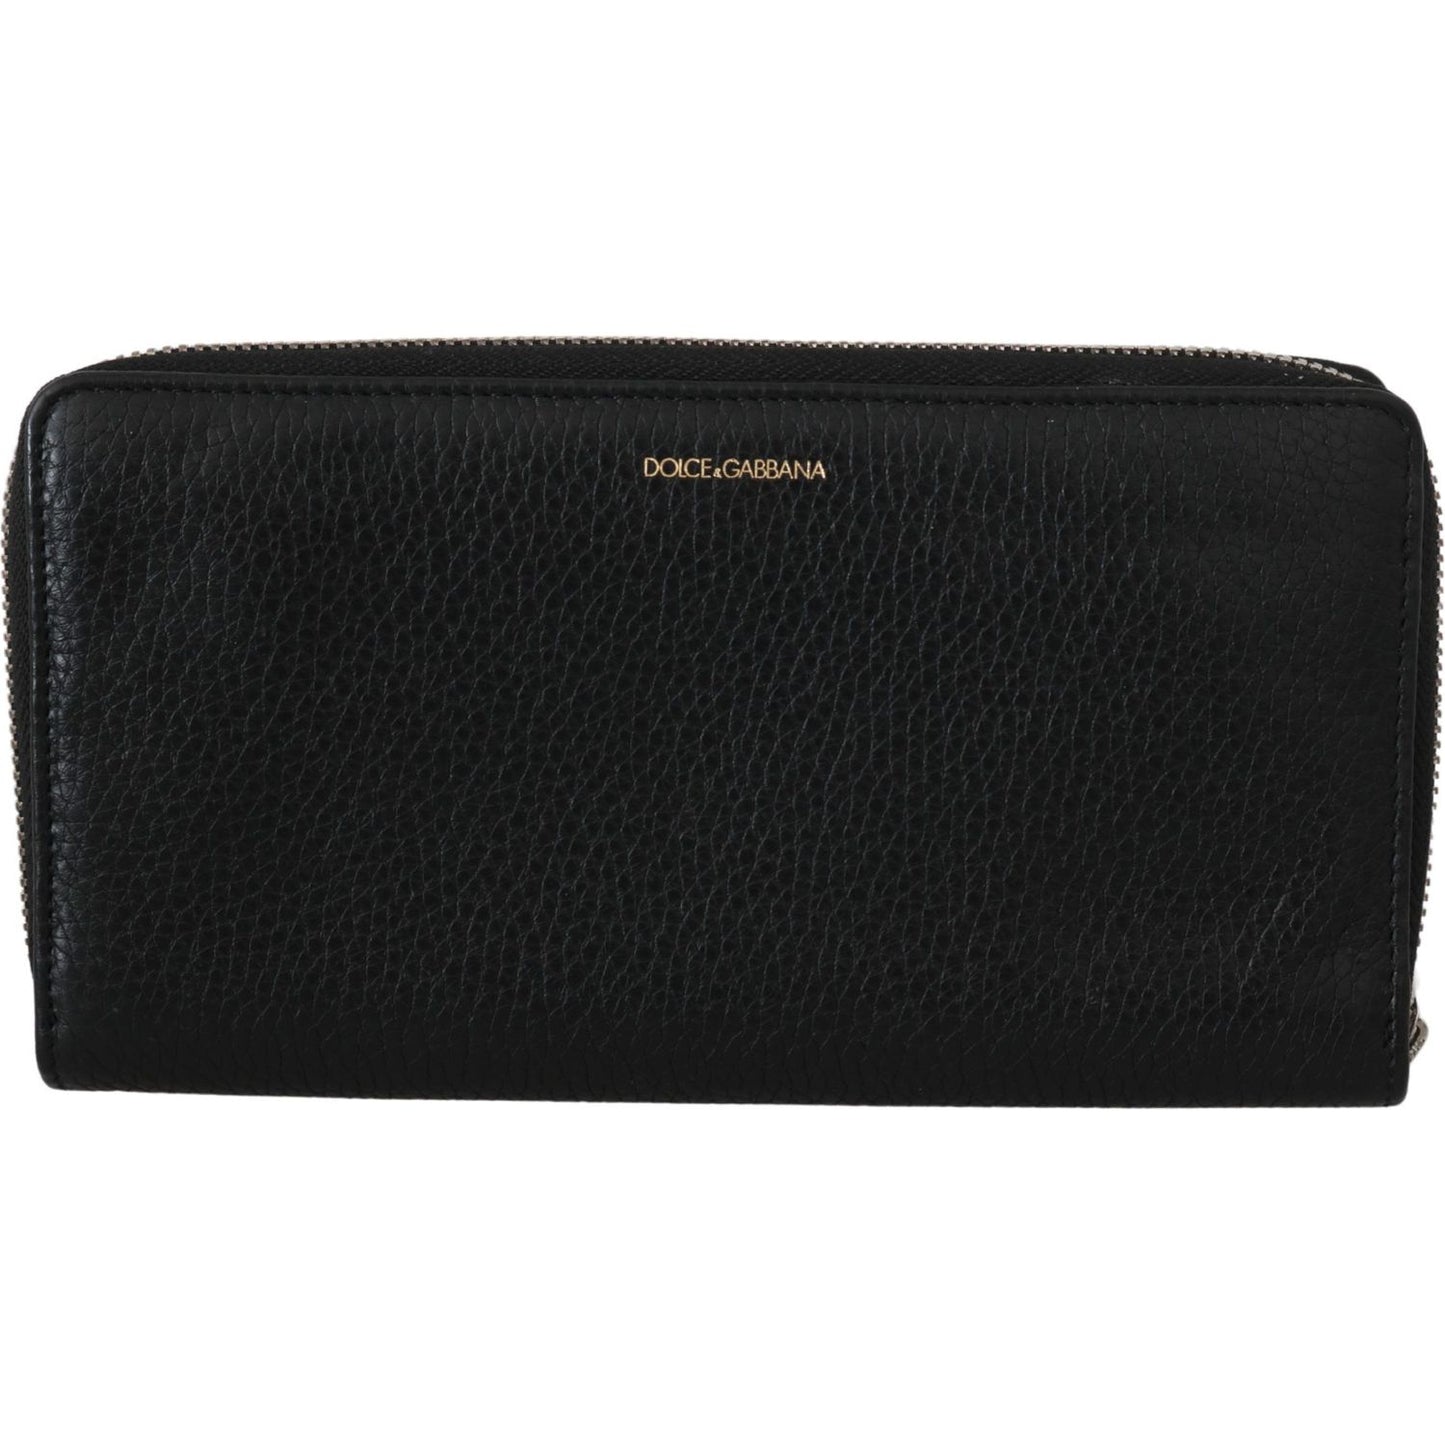 Dolce & Gabbana Elegant Black Leather Zip Continental Wallet Purse black-mens-zipper-continental-purse-100-leather-wallet